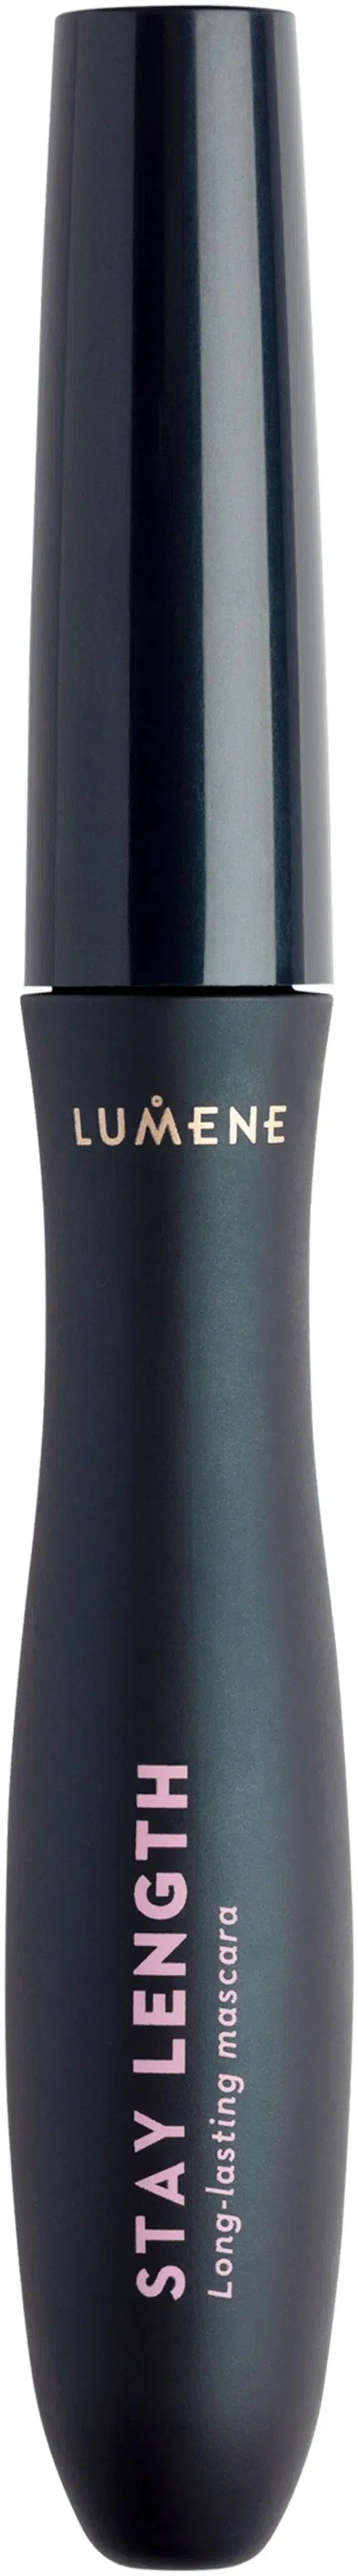 Lumene Stay Length Mascara Black 9 ml